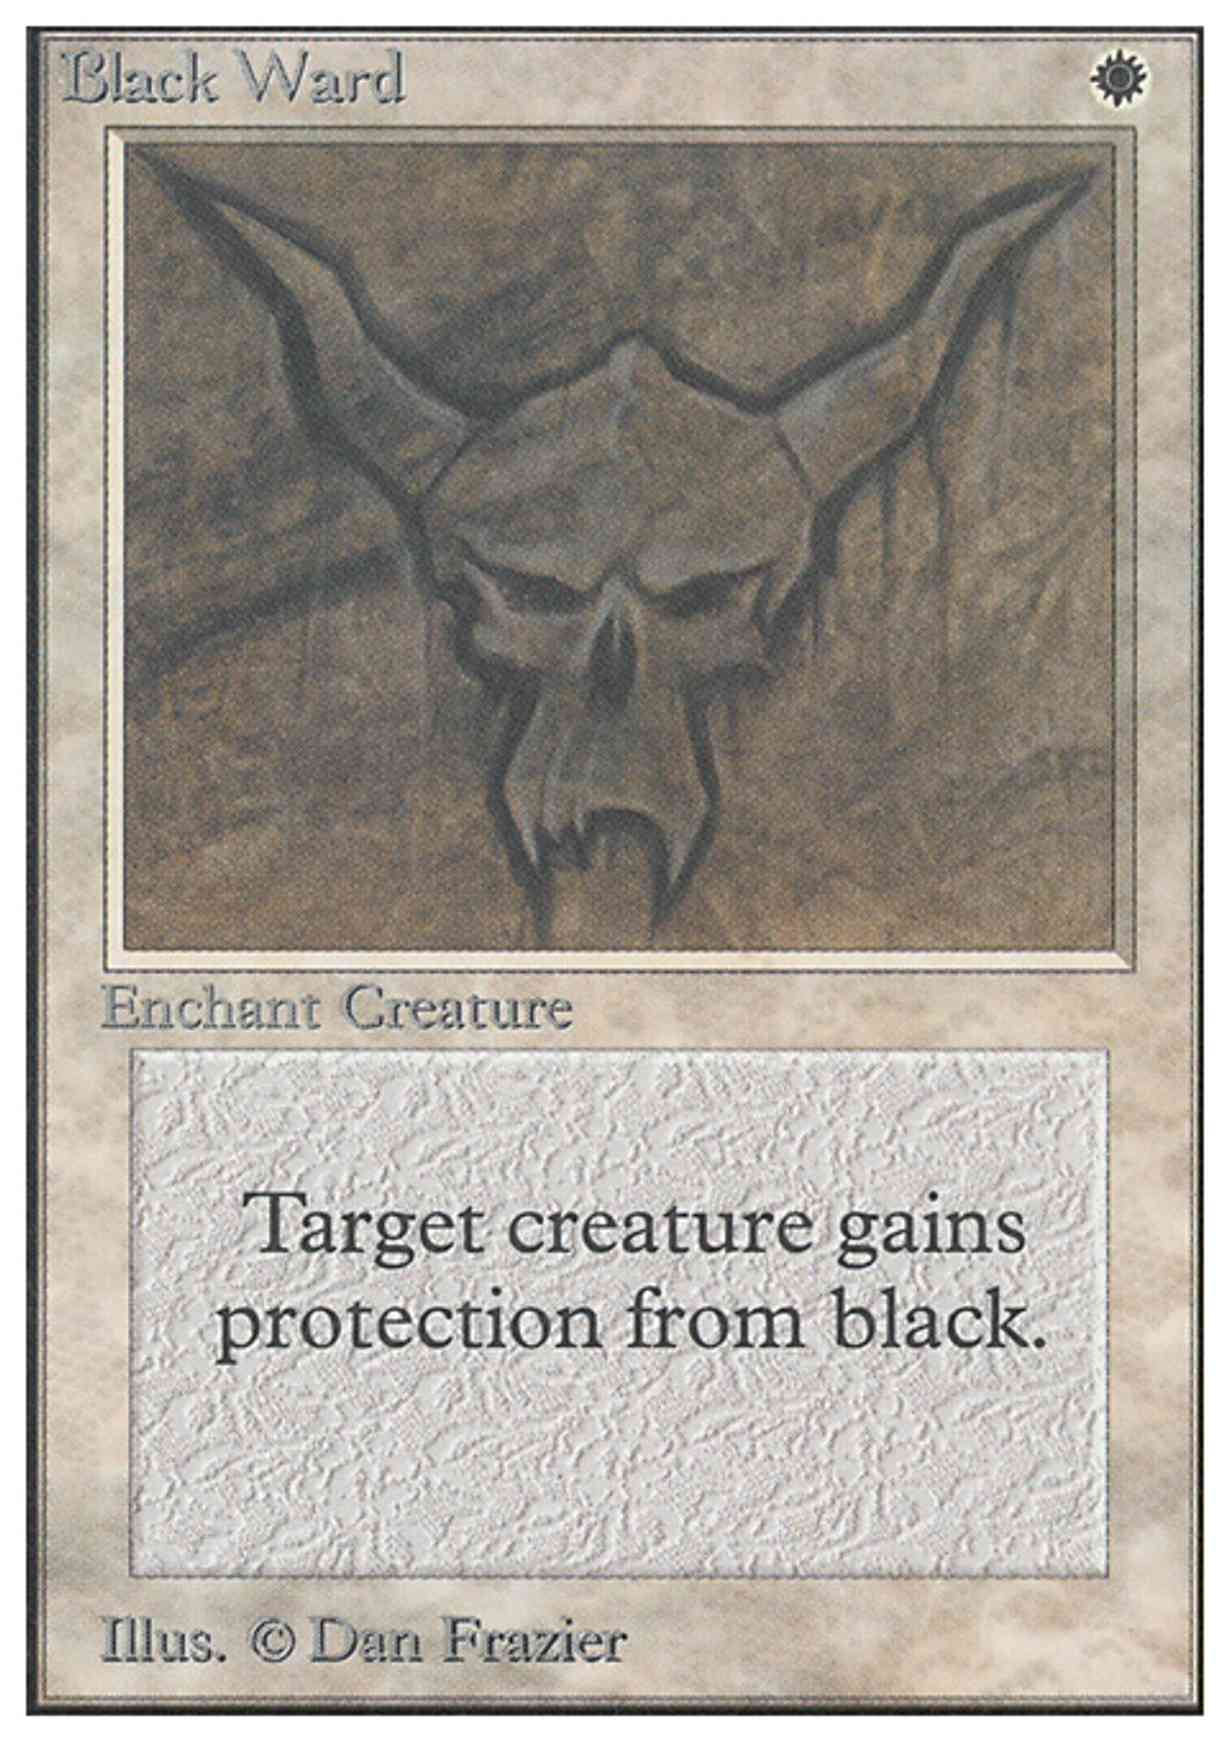 Black Ward magic card front